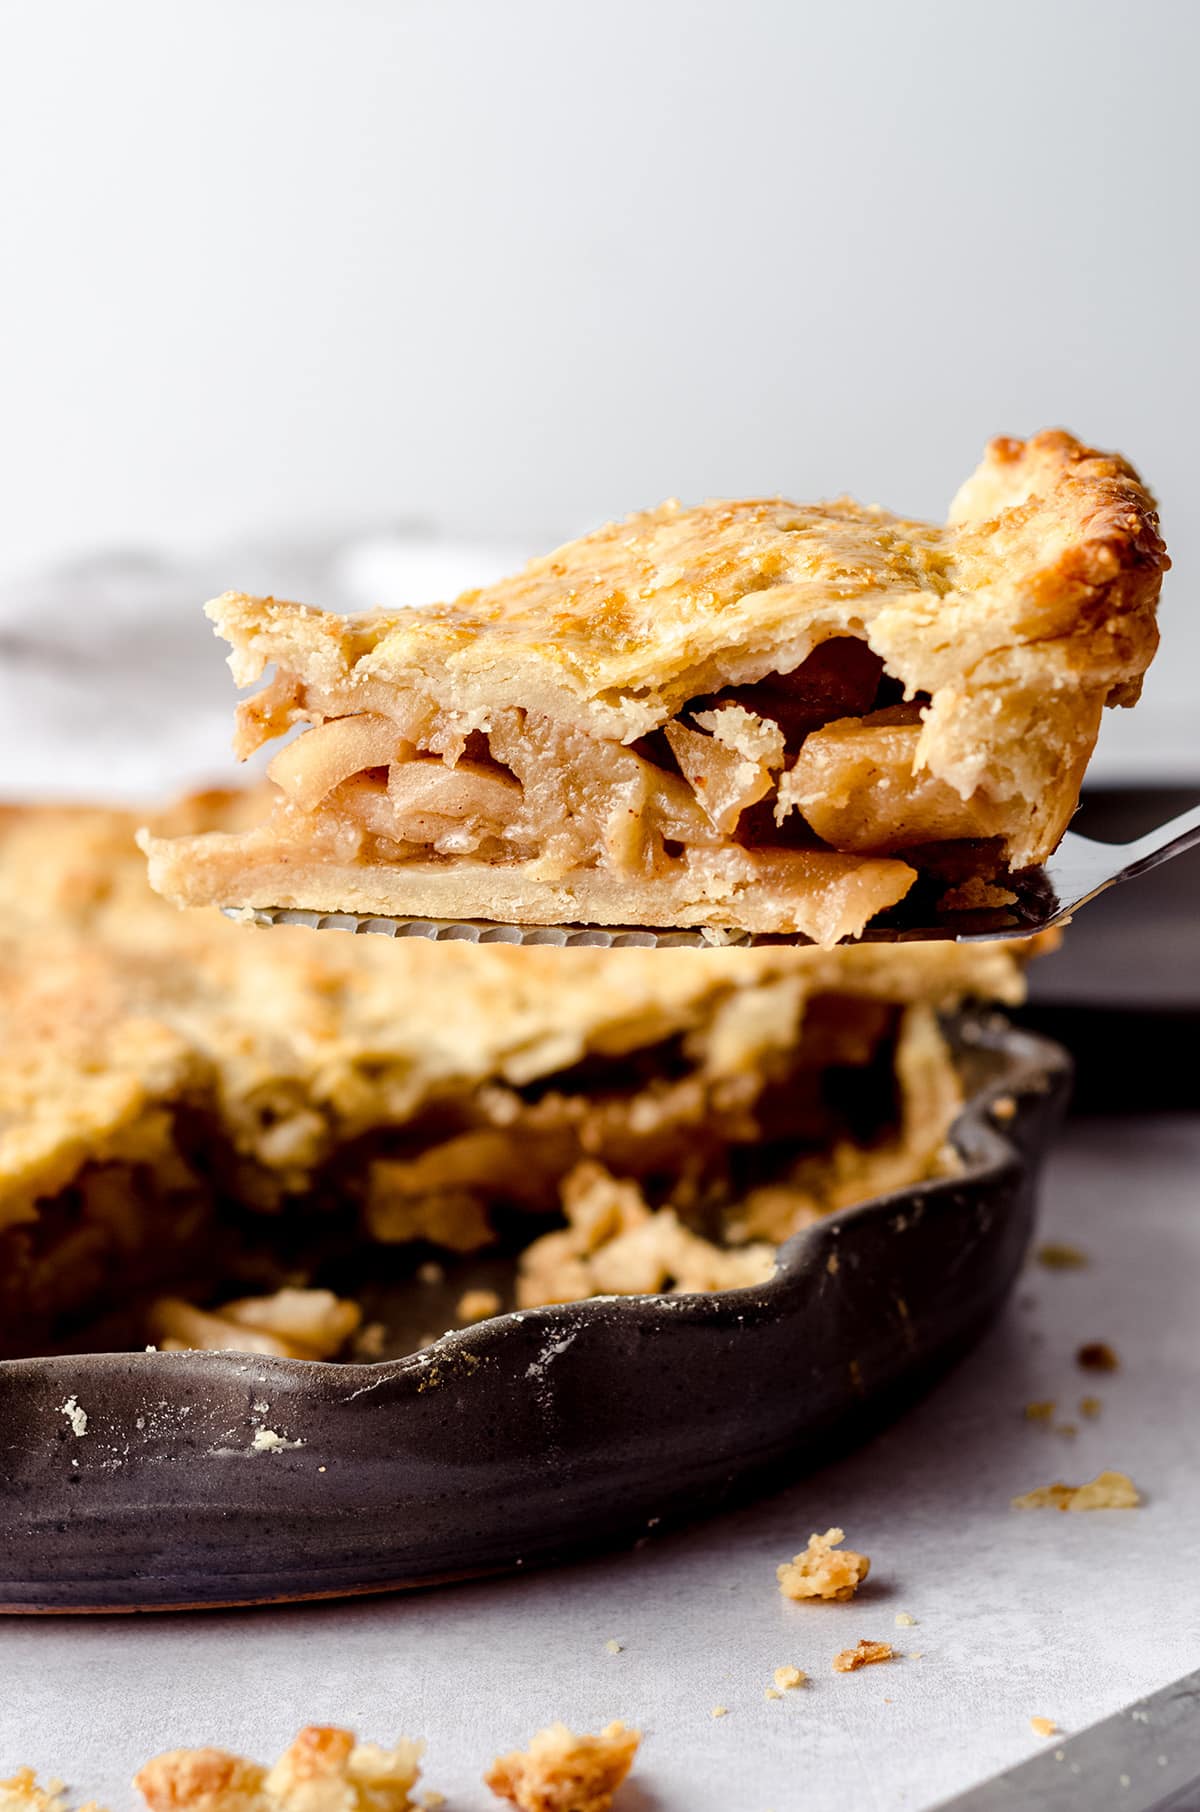 Gordon Ramsay’s Caramelized Apple Pie